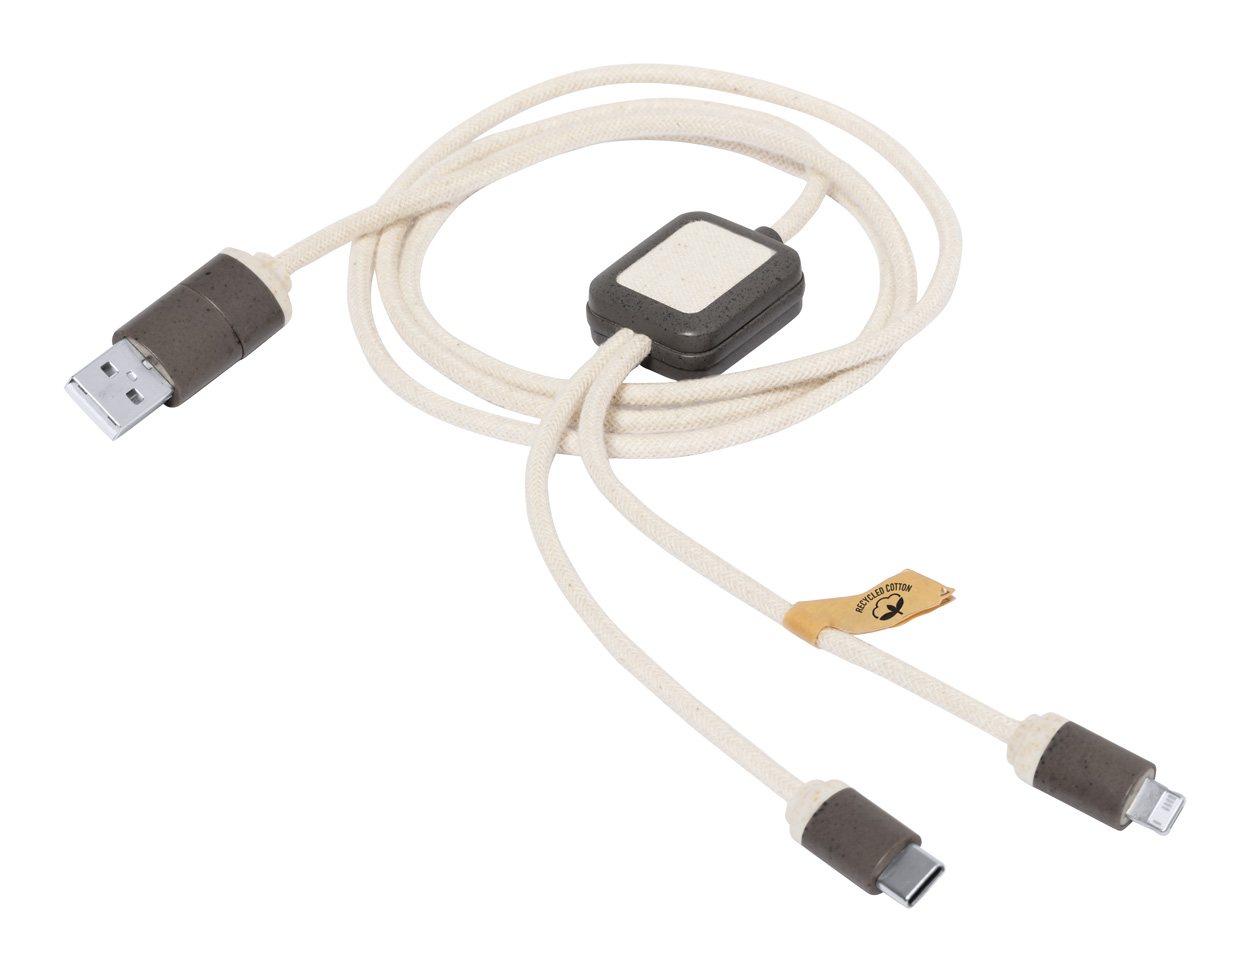 Seymur USB charger cable